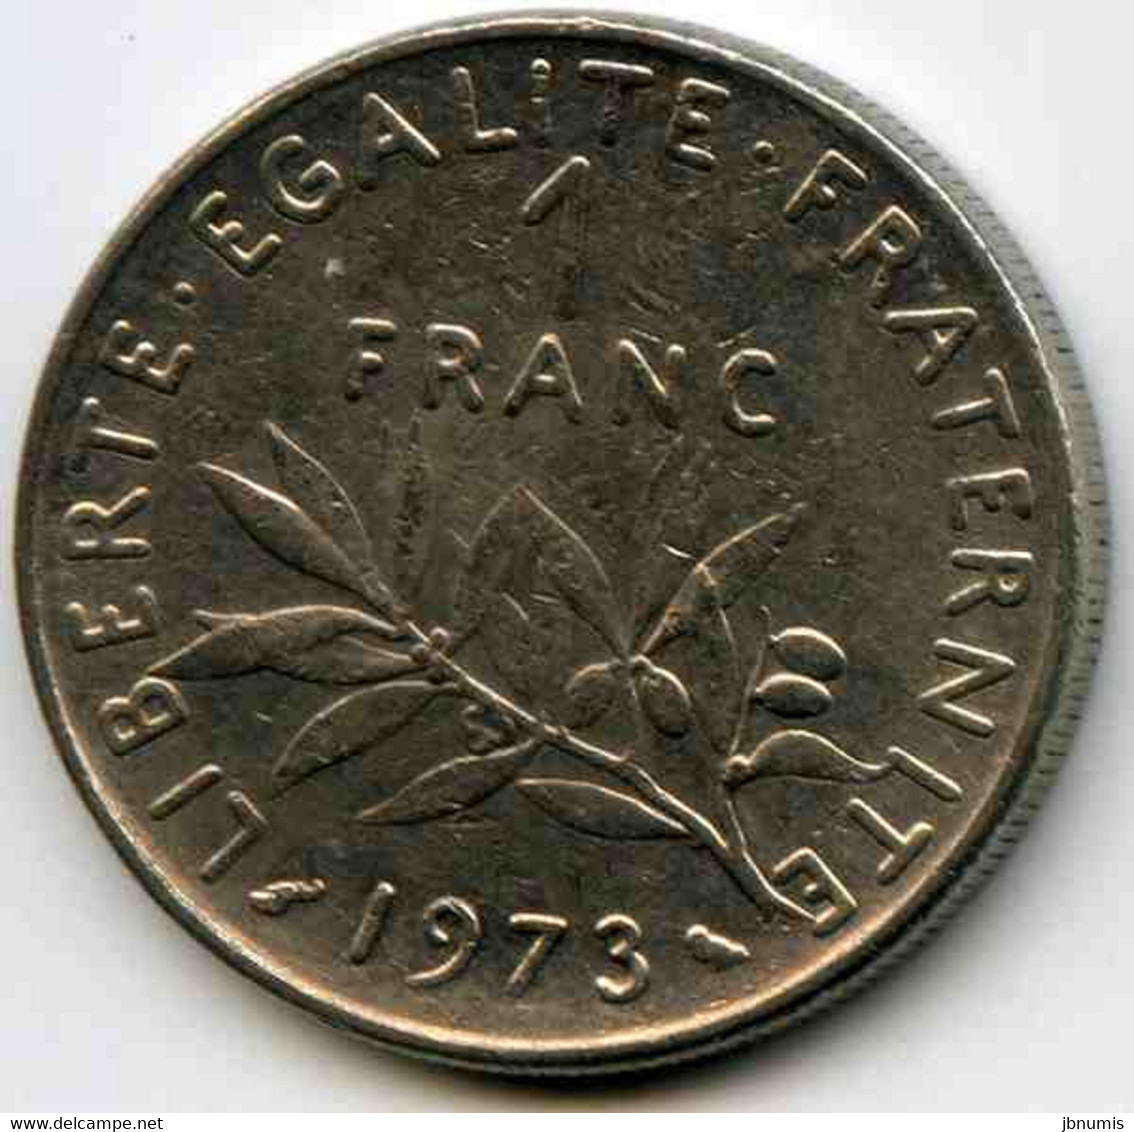 France 1 Franc 1973 GAD 474 KM 925.1 - 1 Franc